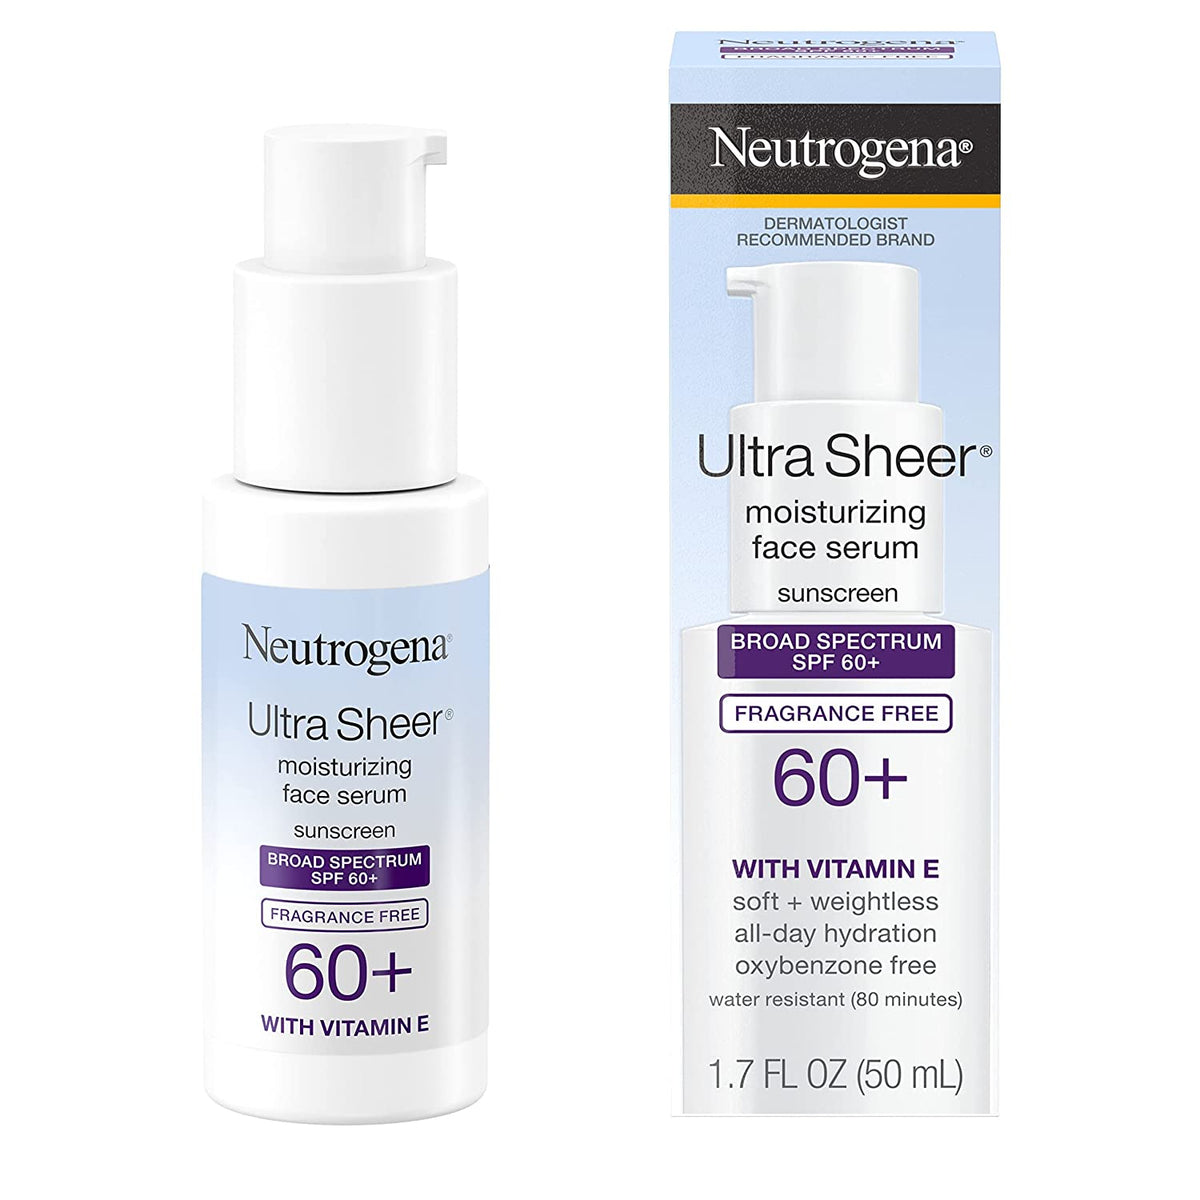 Neutrogena Ultra Sheer Moisturizing Face Serum Sunscreen with Vitamin E Broad Spectrum SPF 60+ Fragrance Free (50ml) Neutrogena